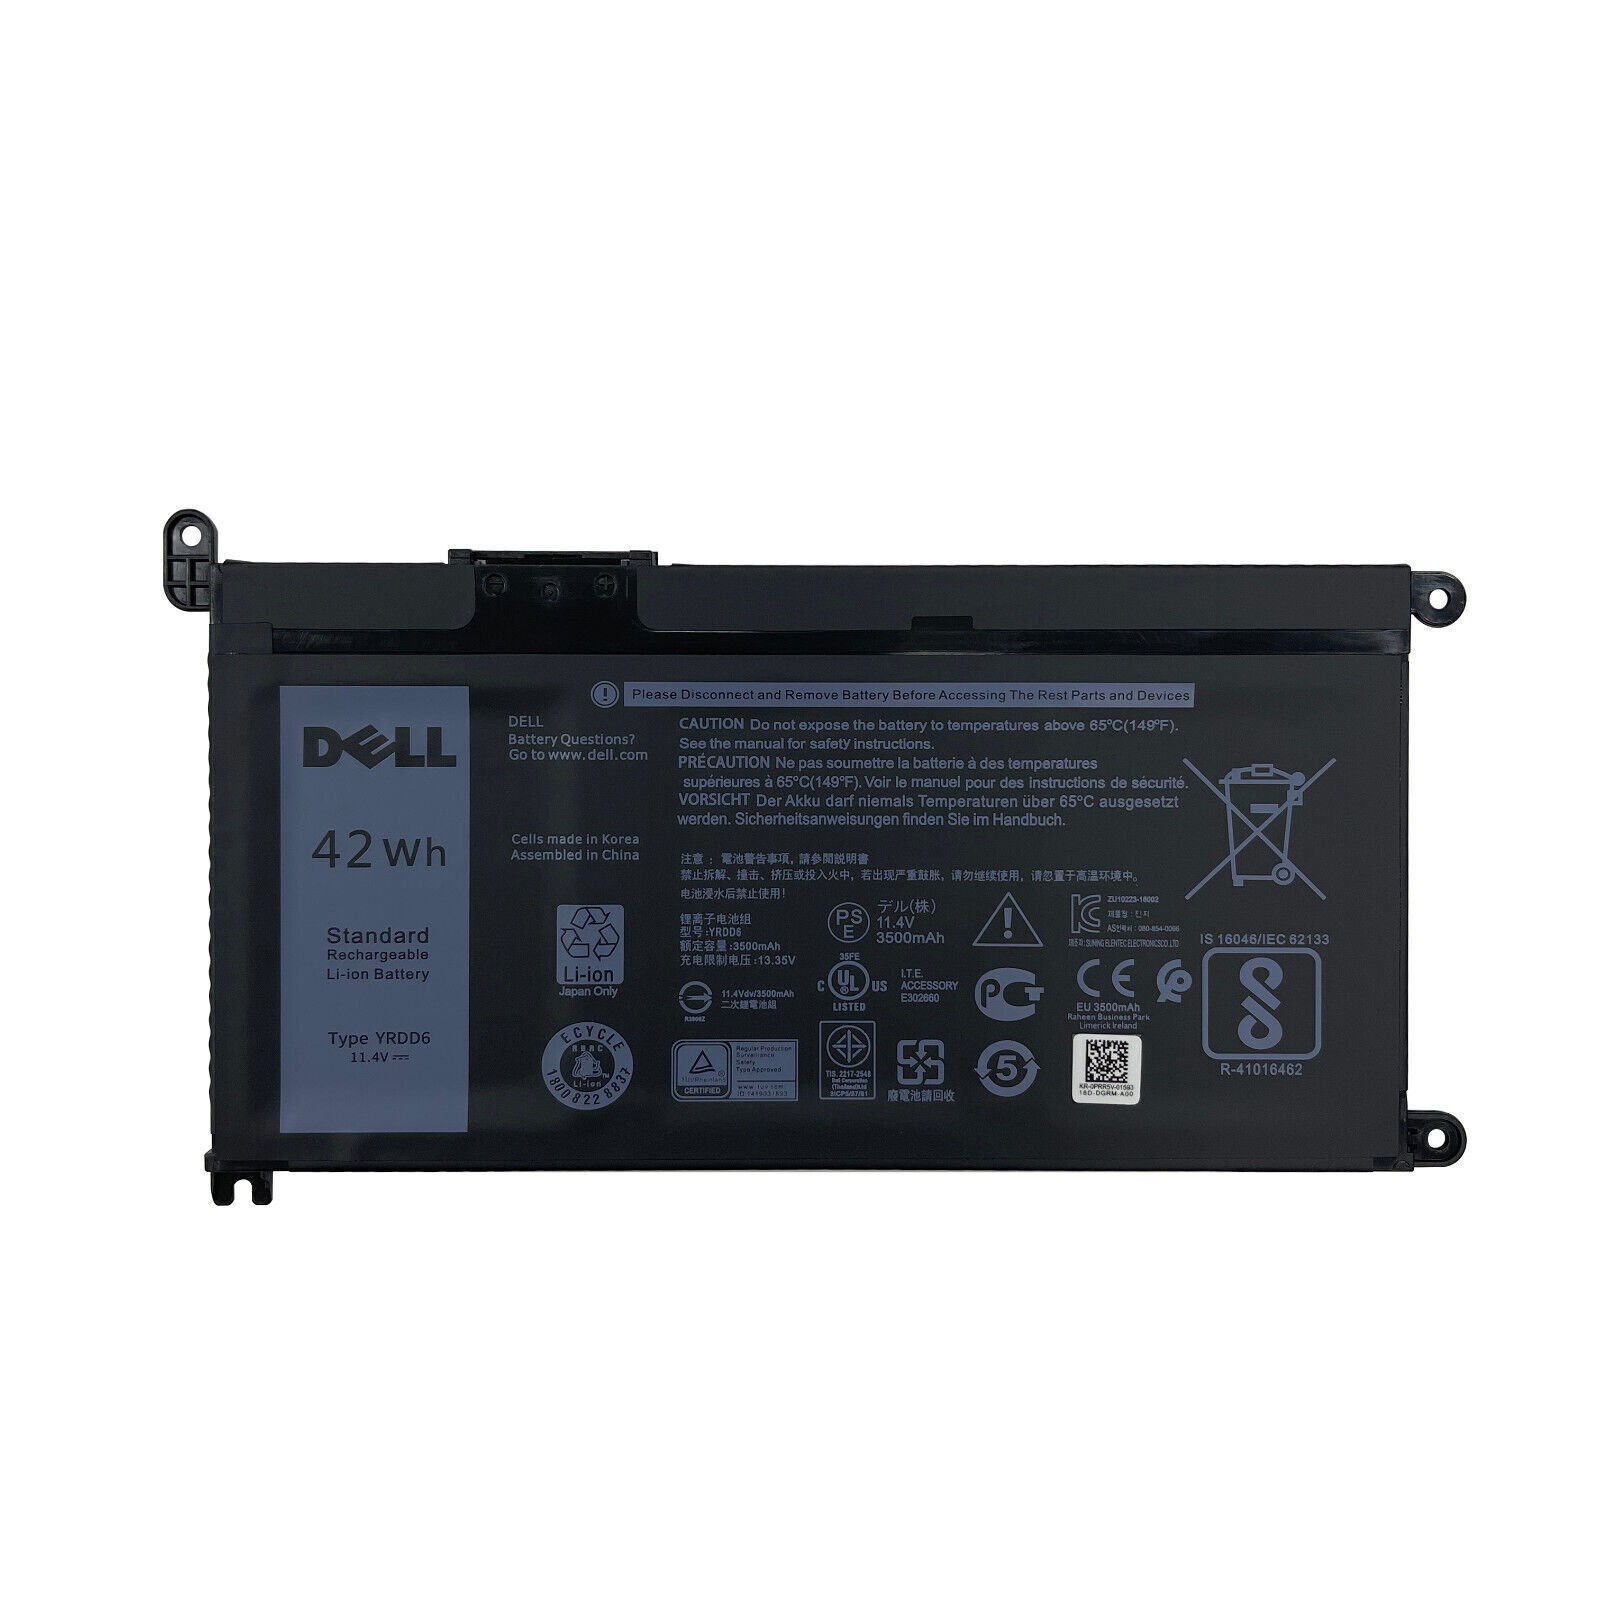 OEM Genuine 42wh YRDD6 Battery For Dell Inspiron 3493 3582 3583 3593 3793 VM732